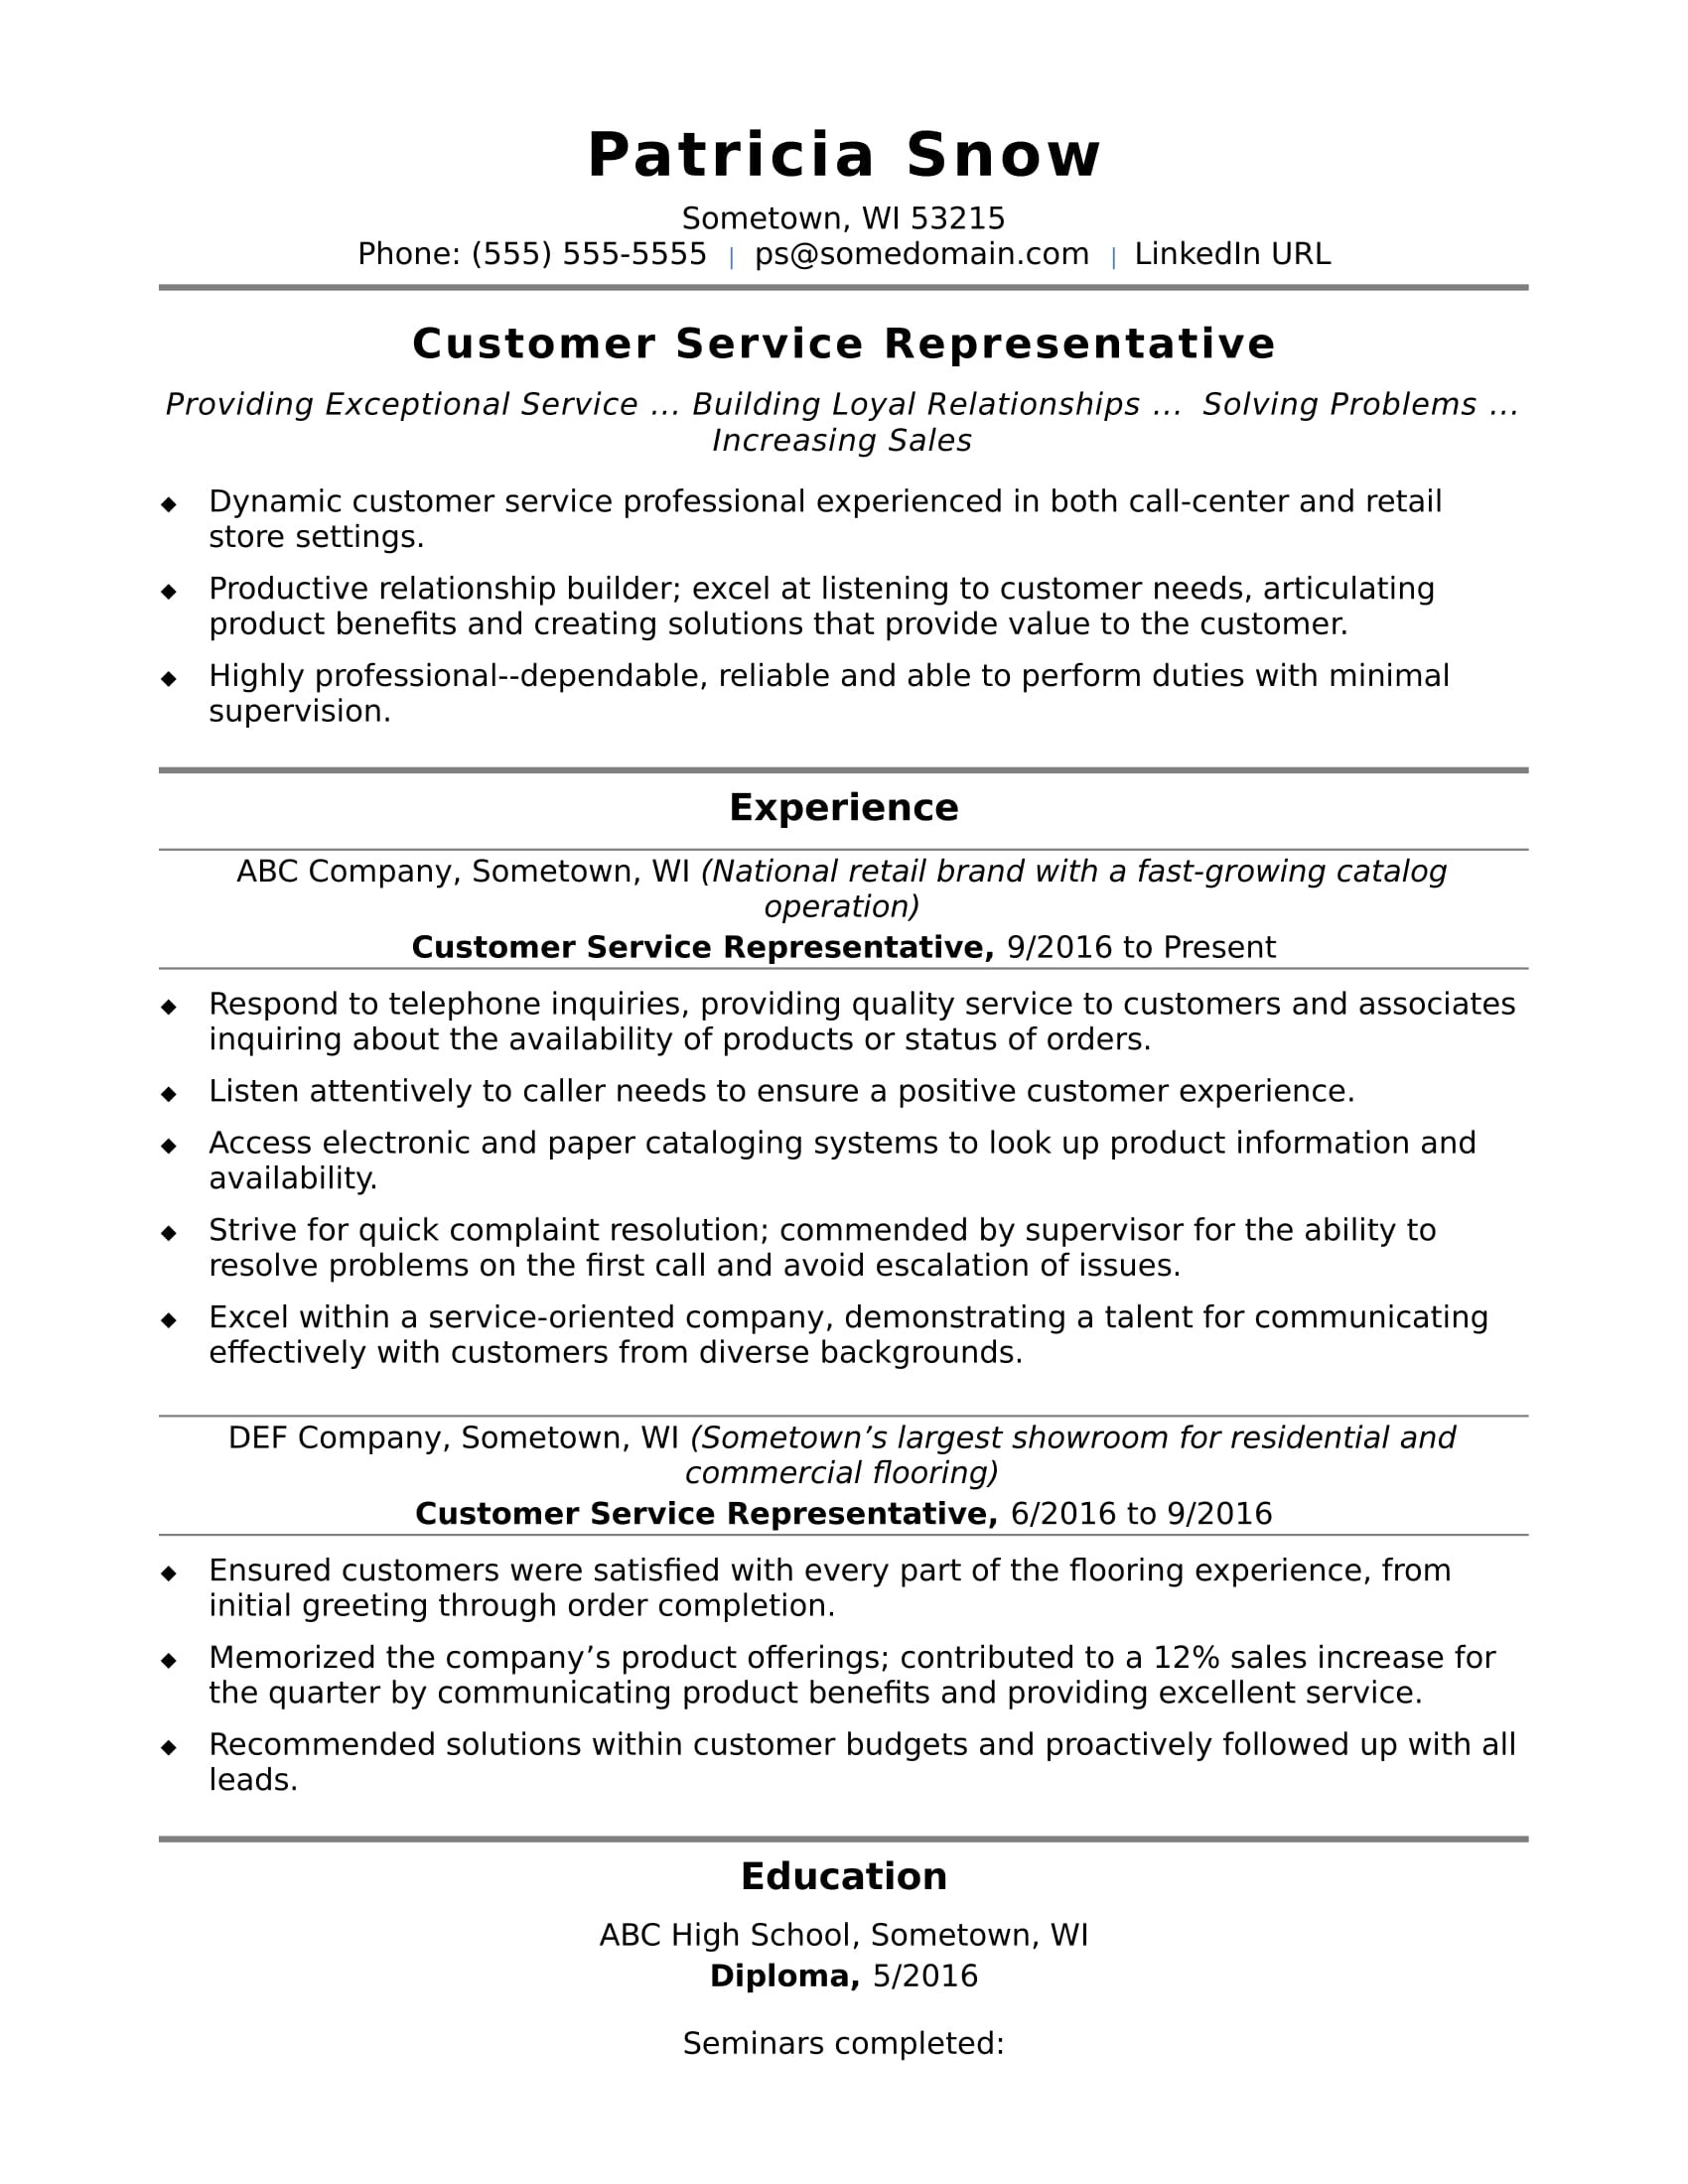 Resume Samples for Customer Service Supervisor Entry-level Customer Service Resume Sample Monster.com